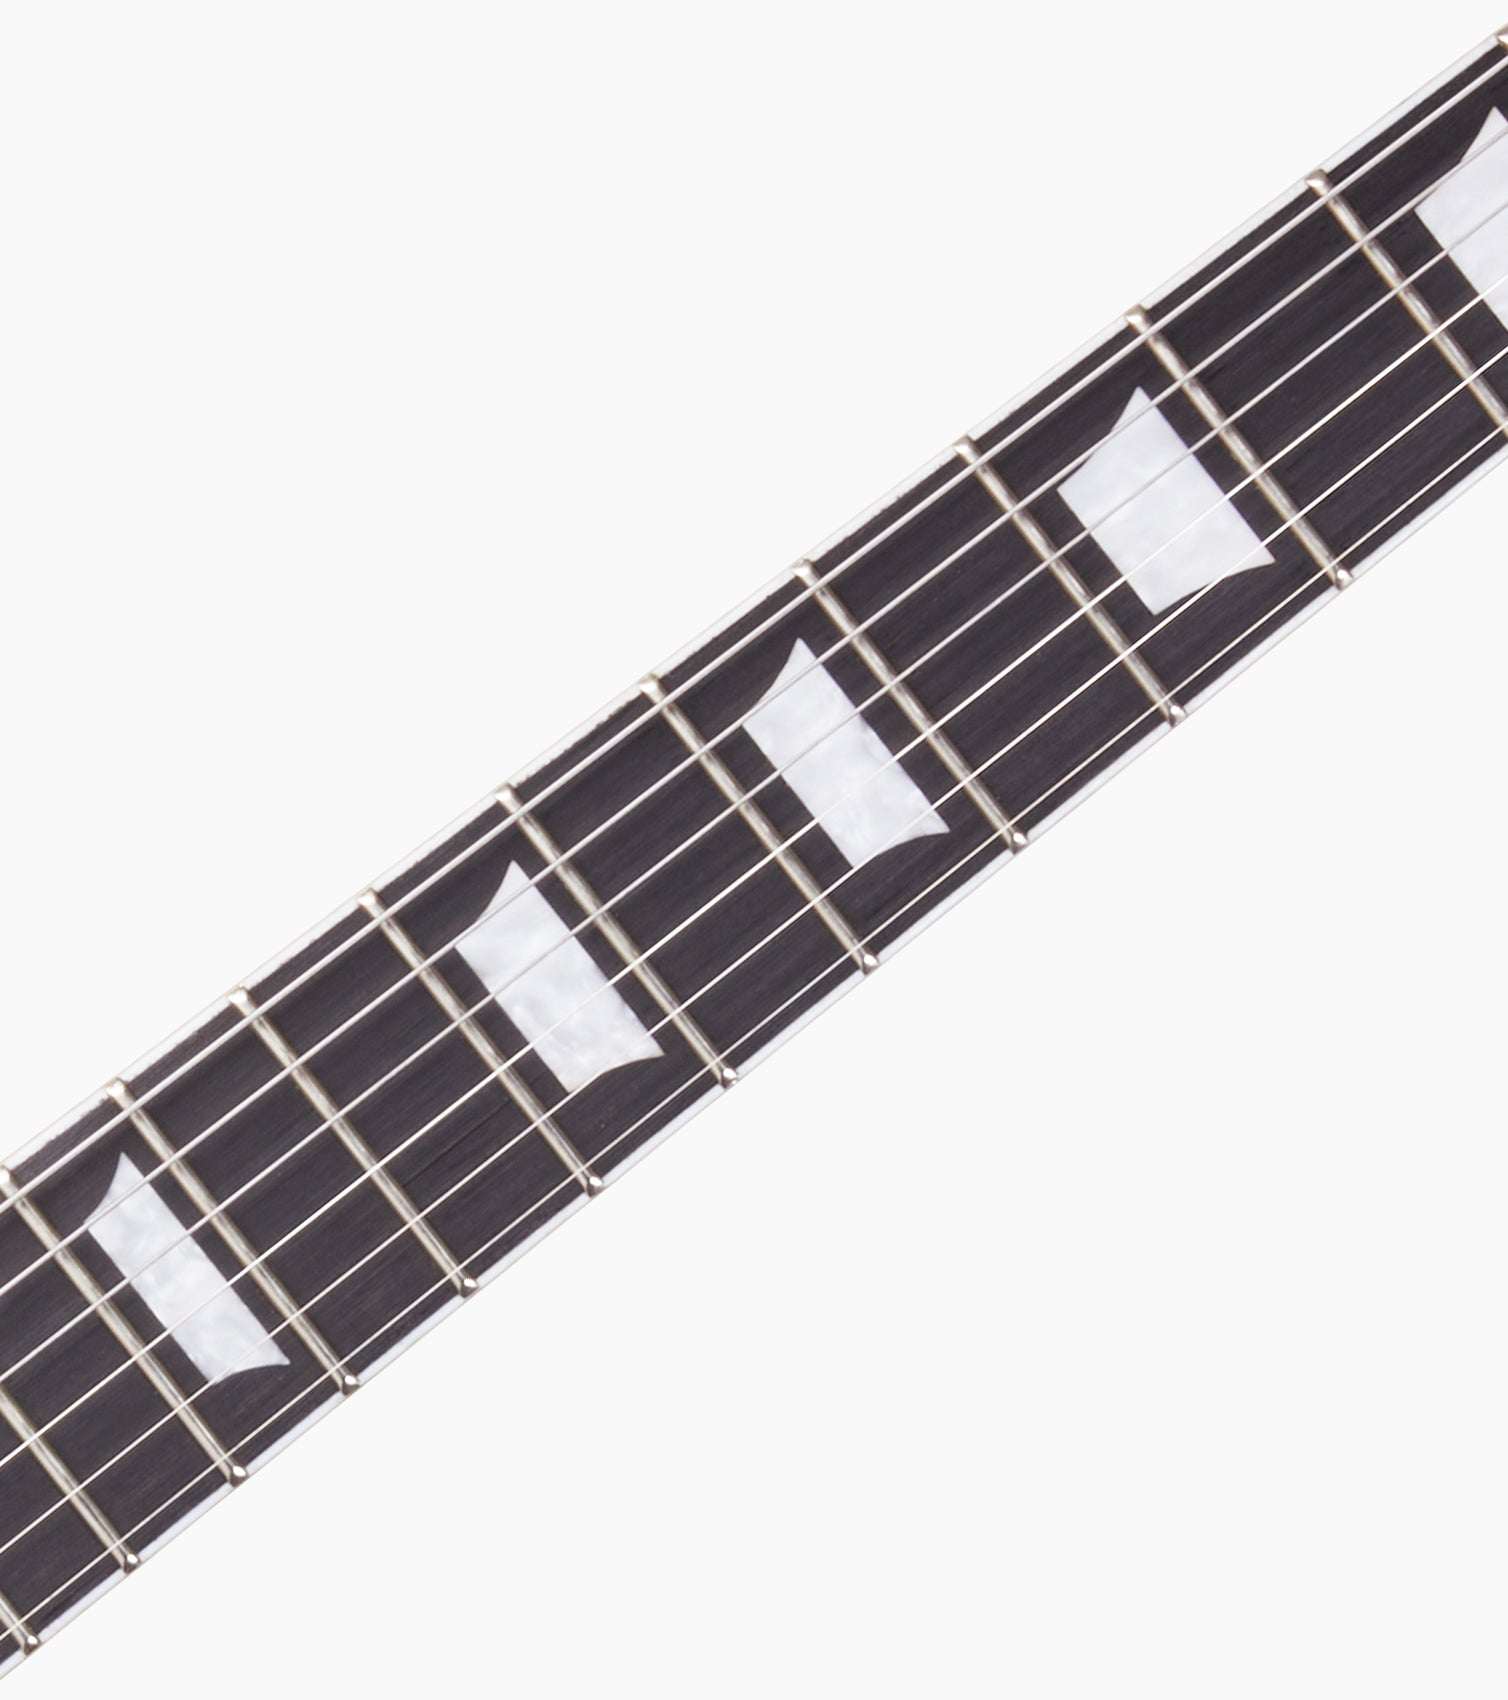 close-up of Sunburst les paul inspired electric guitar fretboard